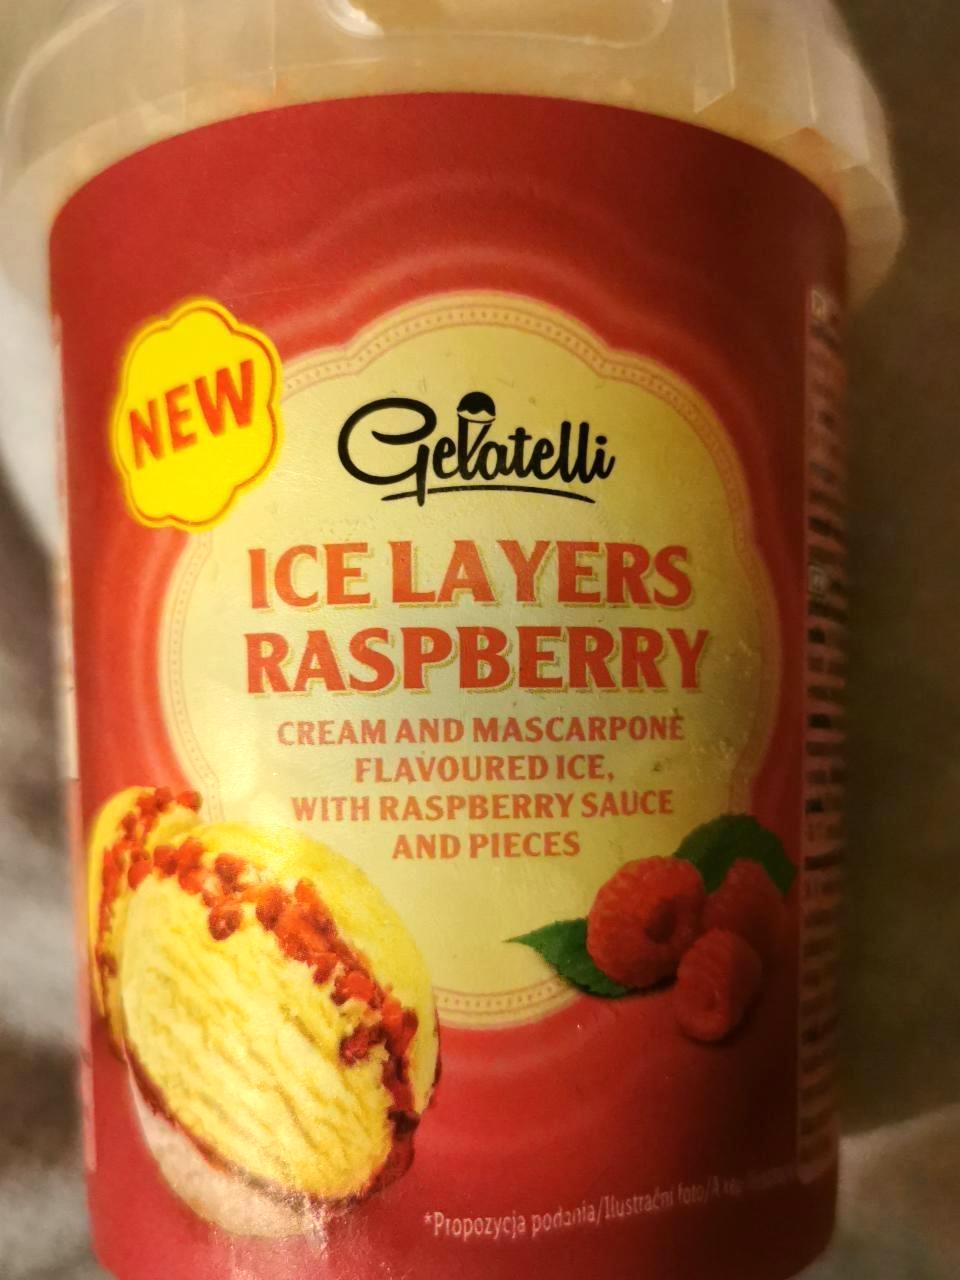 Képek - Ice layers Raspberry Gelatelli